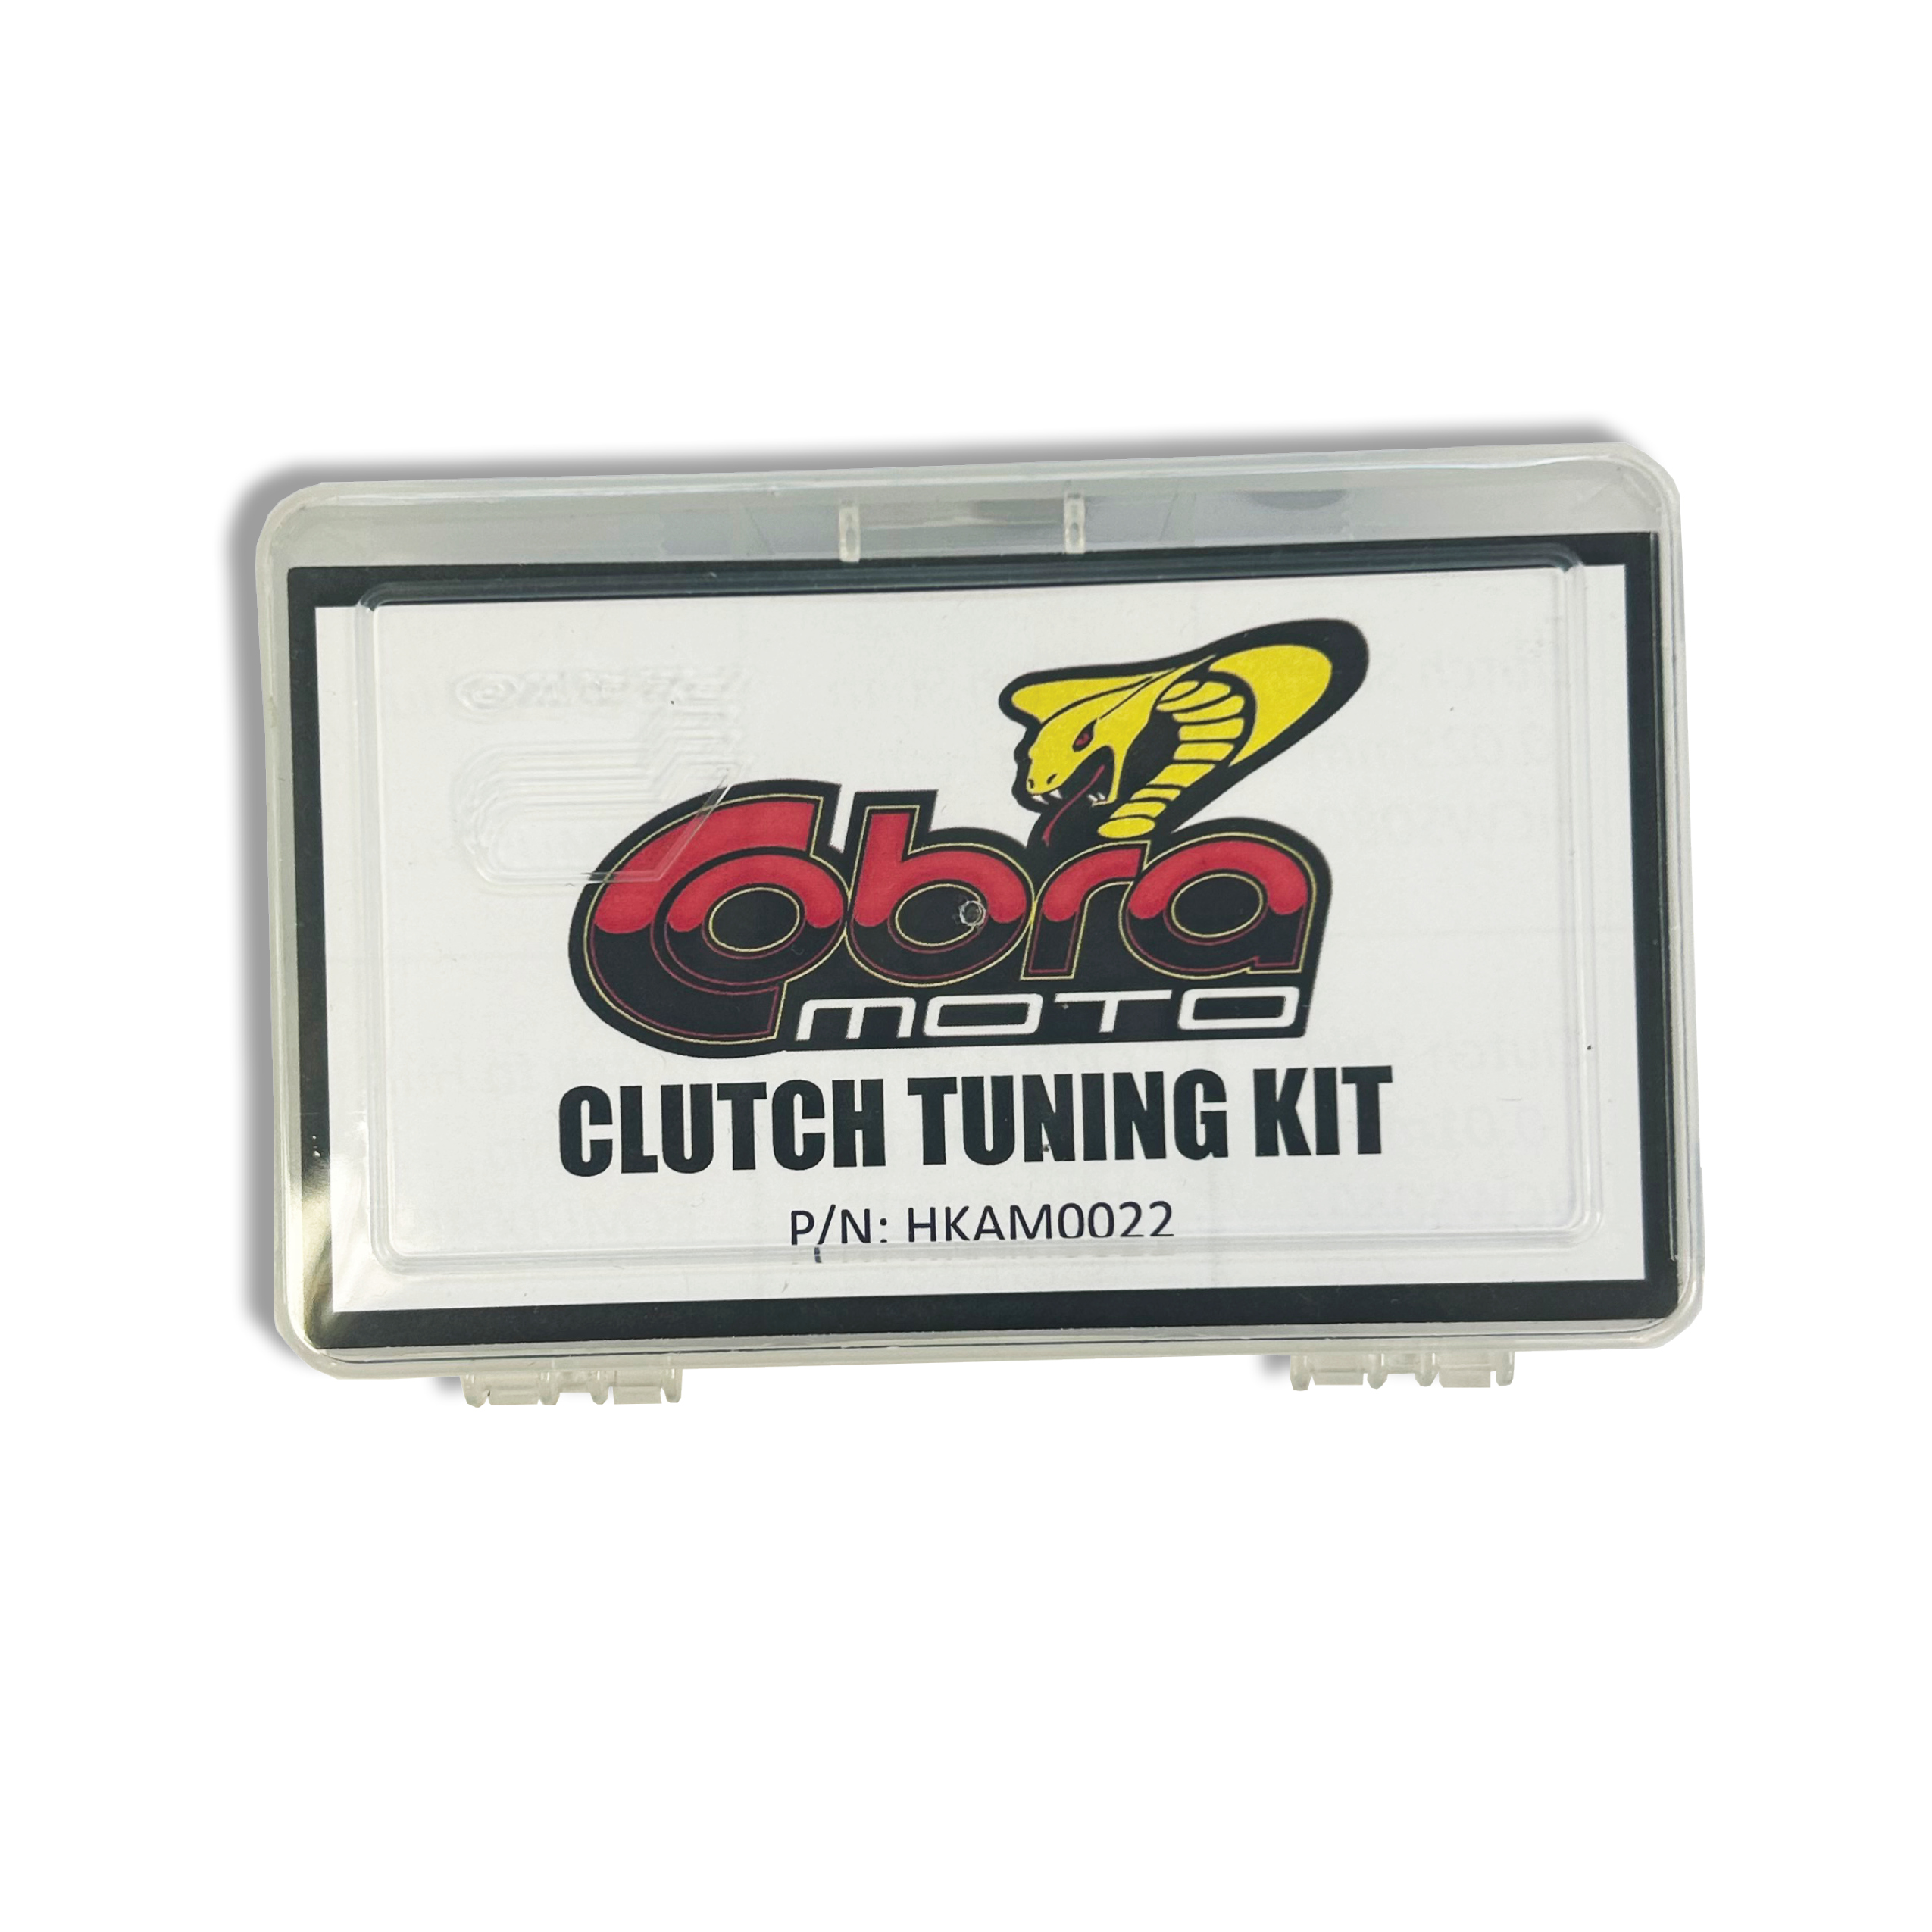 Cobra MOTO hardware clutch kit